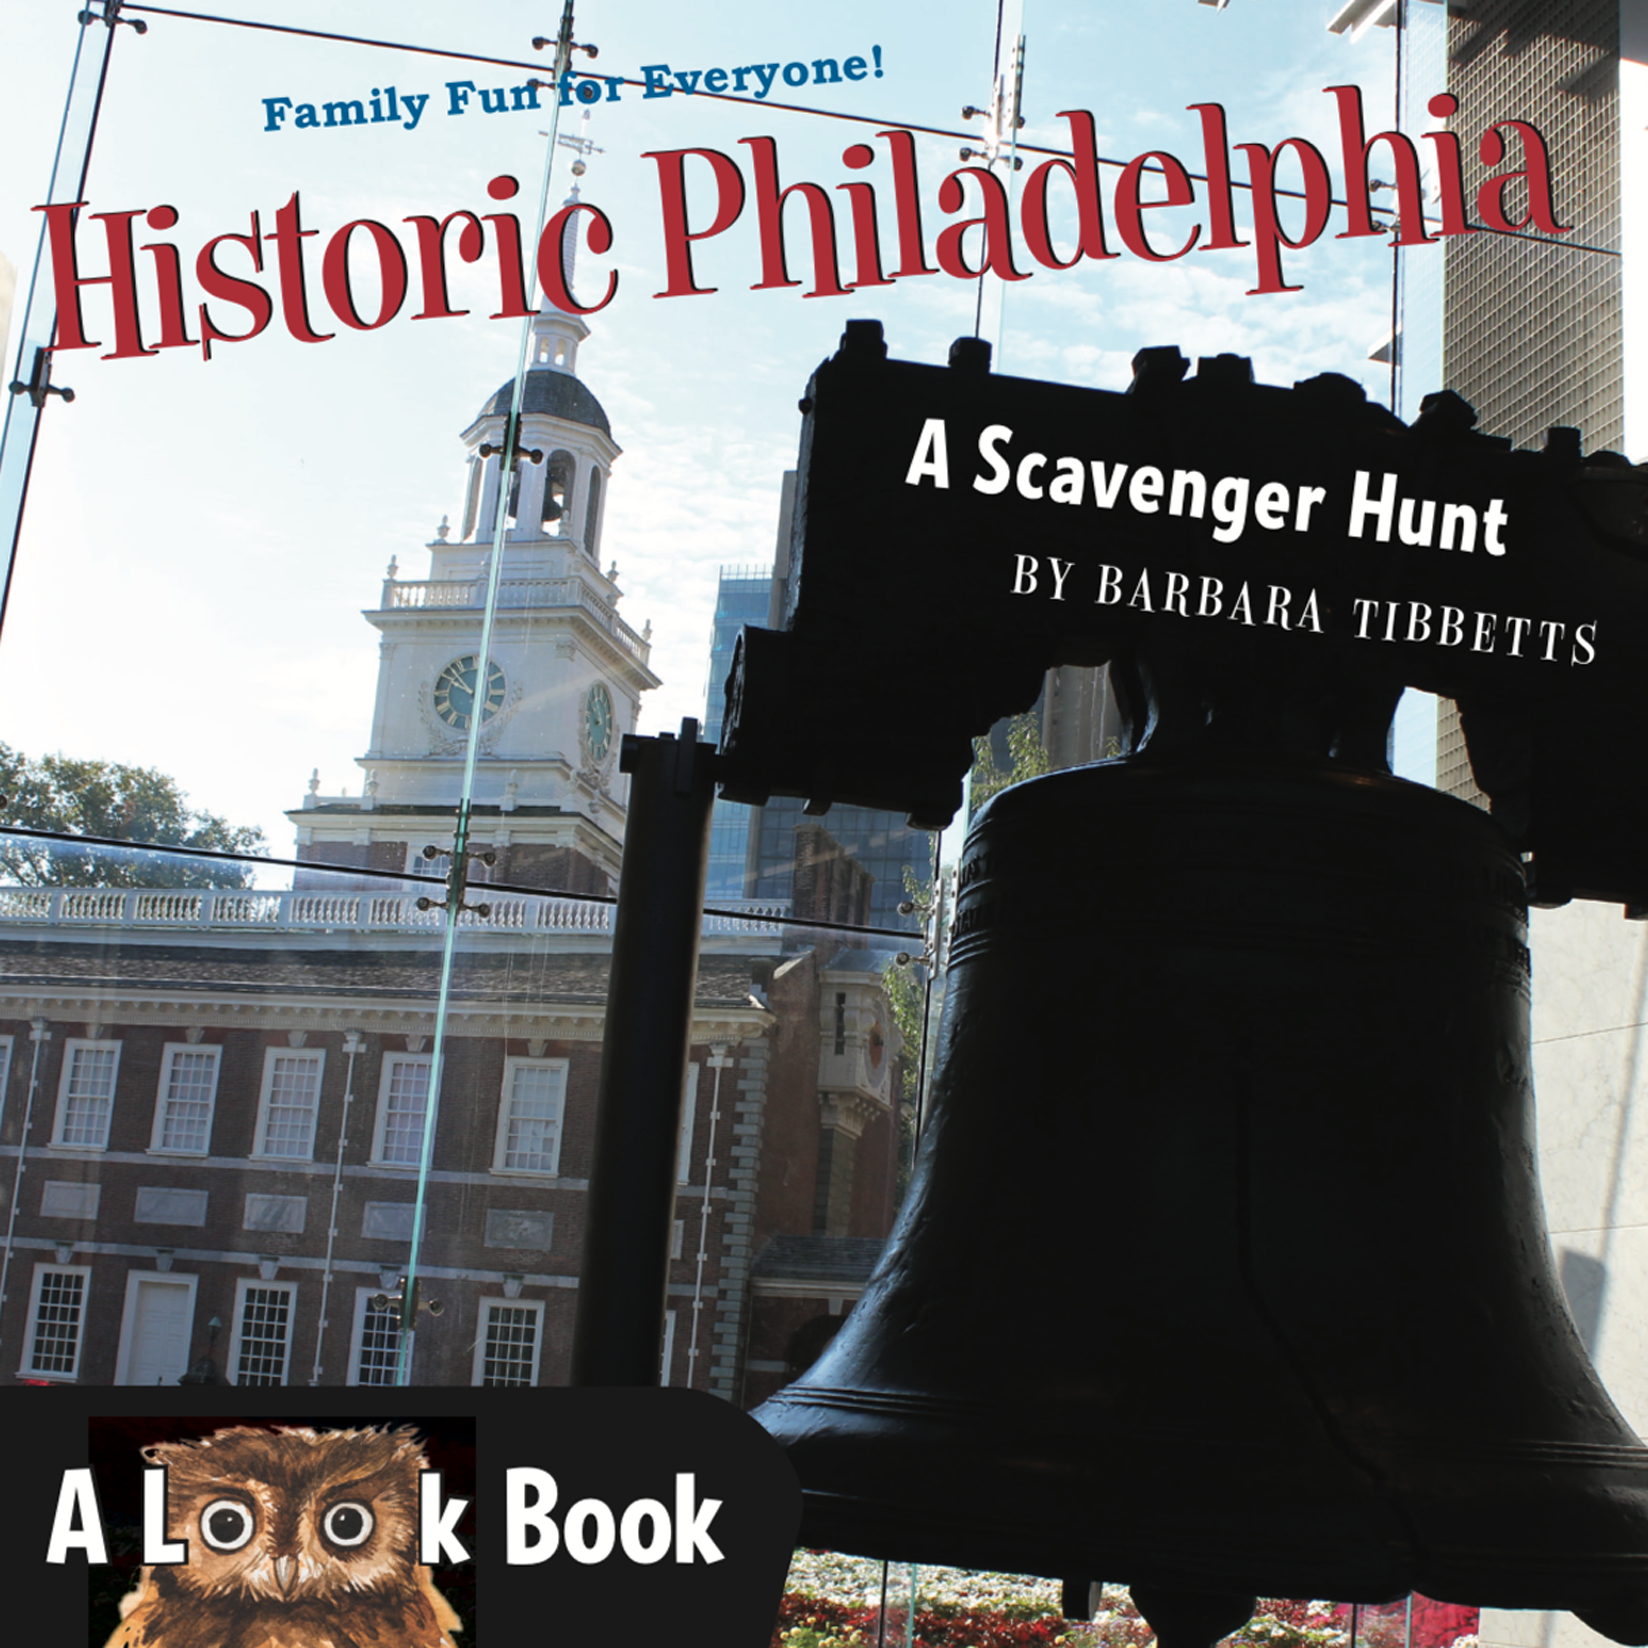 Philadelphia, PA – Look Book Scavenger Hunt